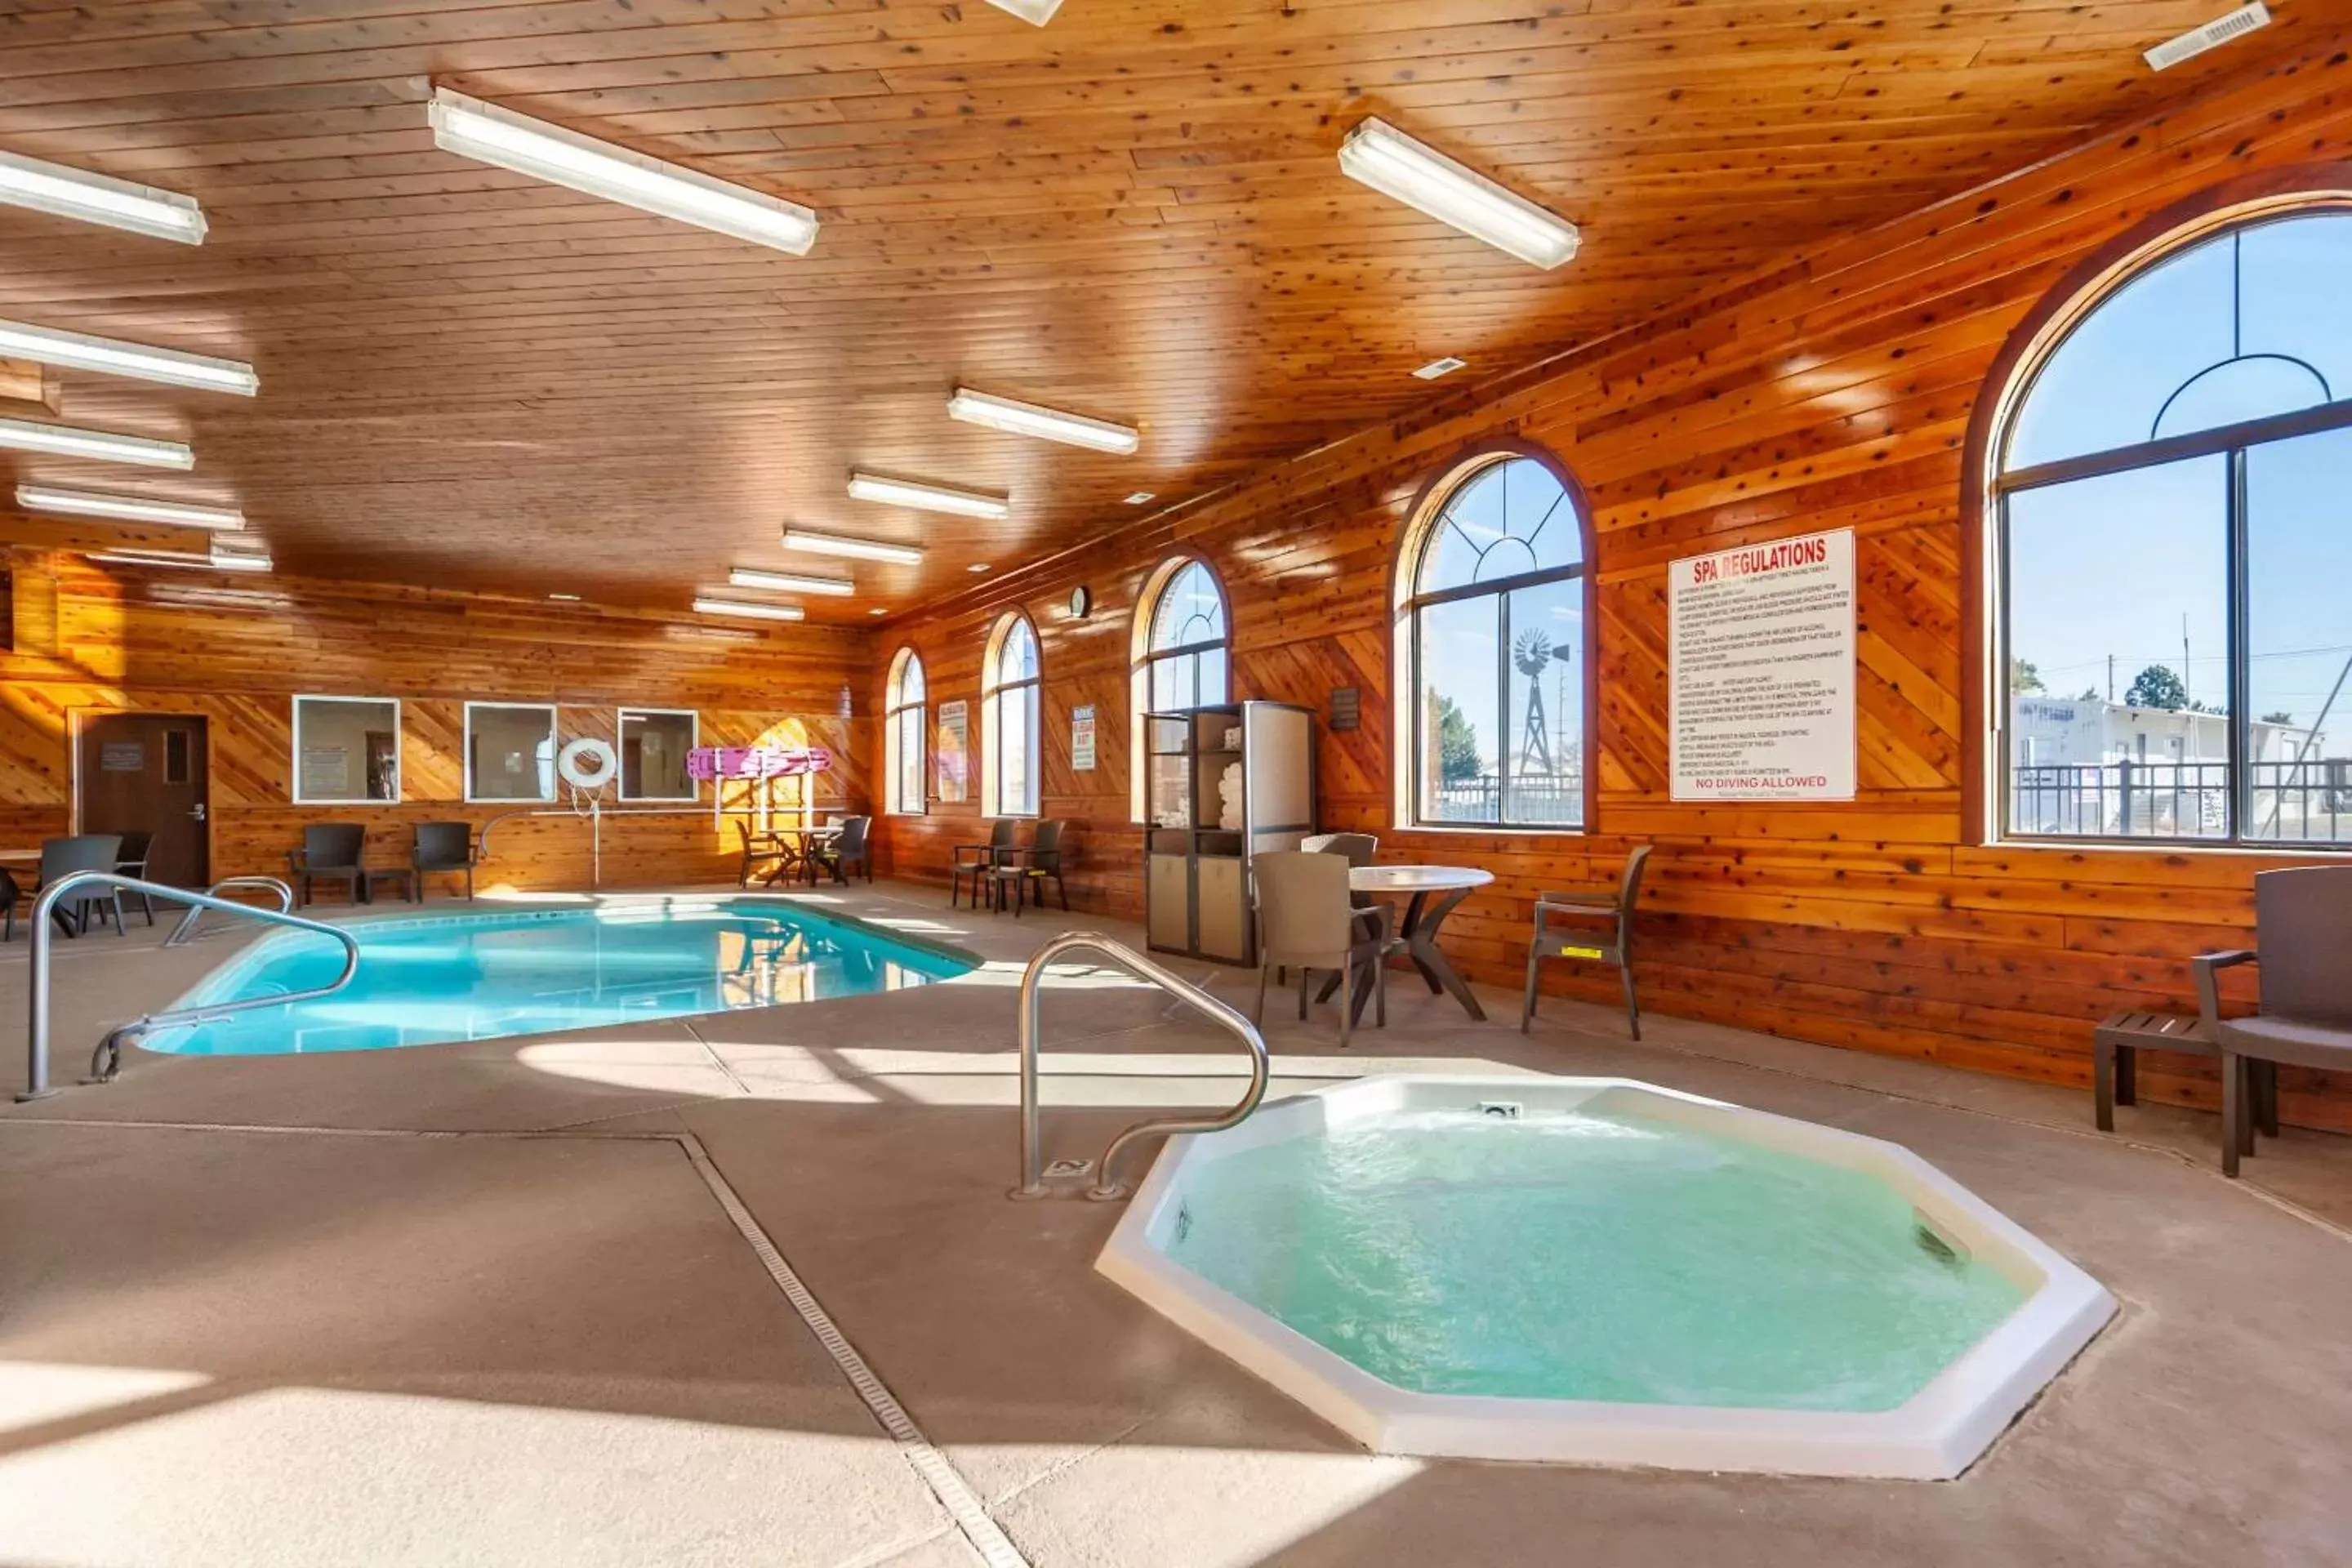 On site, Swimming Pool in Comfort Inn Valentine